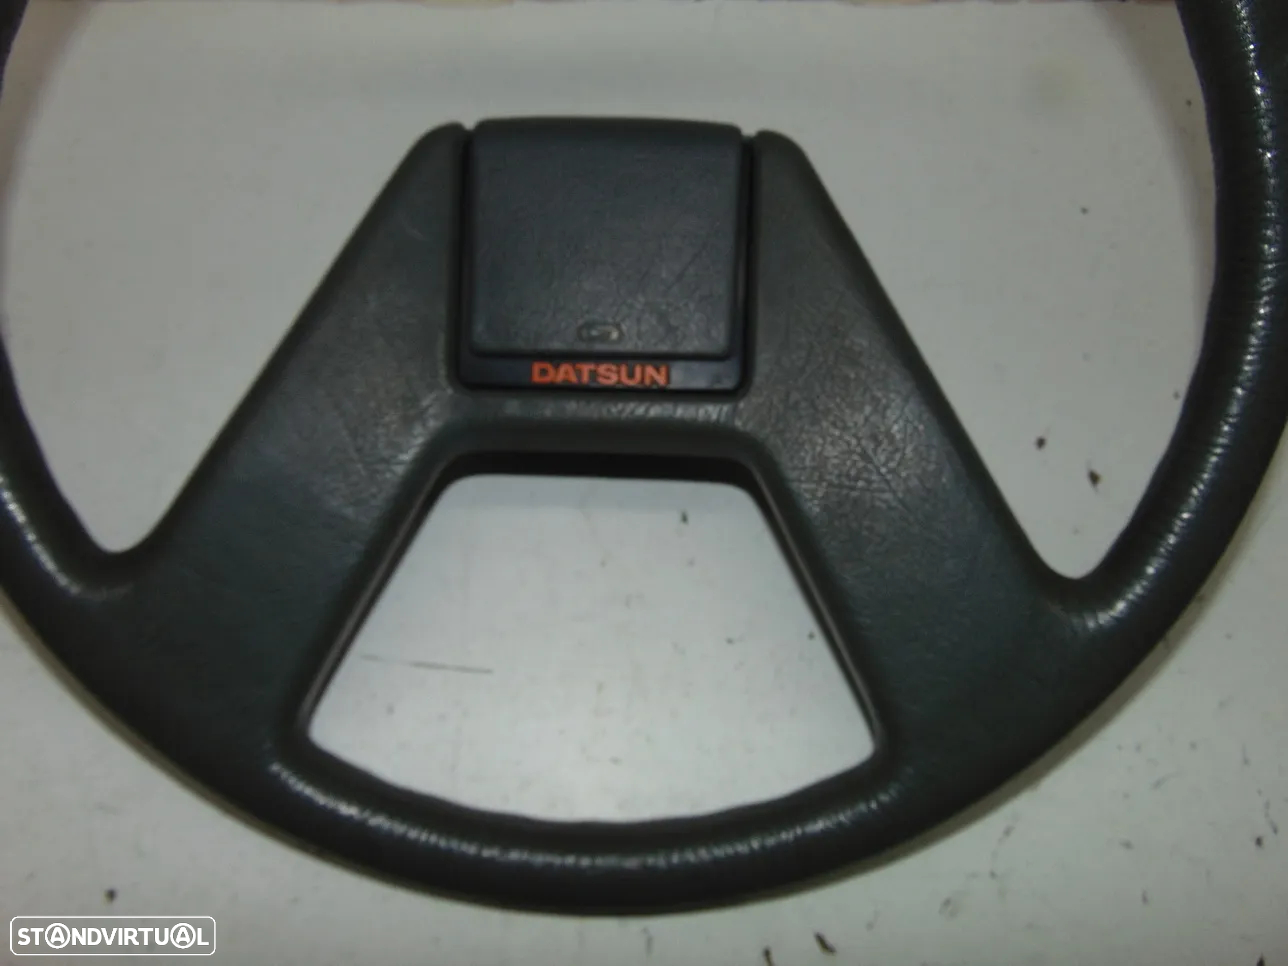 Datsun Stanza coupê volante - 3